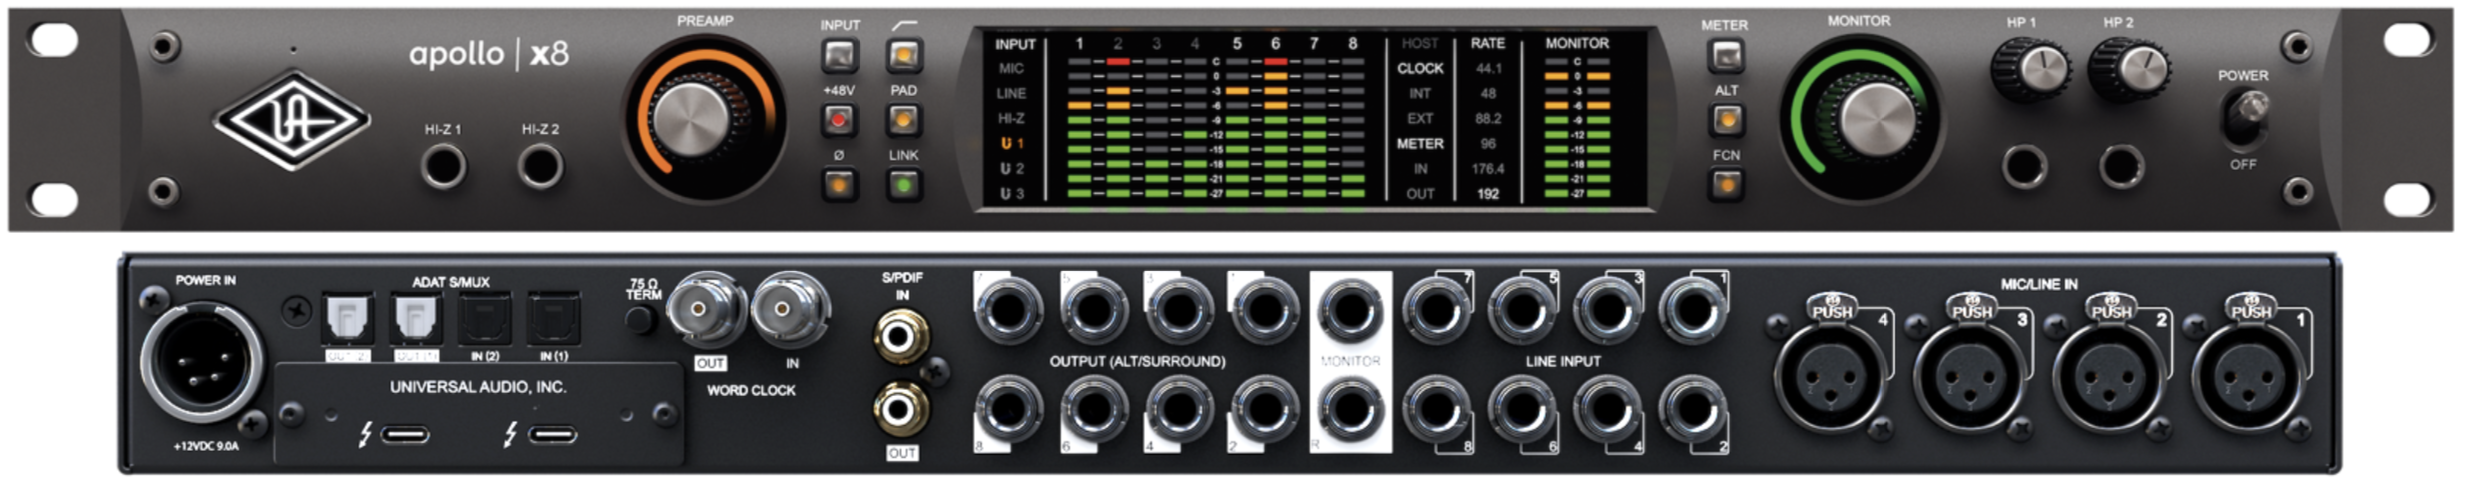 Universal Audio Apollo X8 - Thunderbolt audio interface - Variation 4